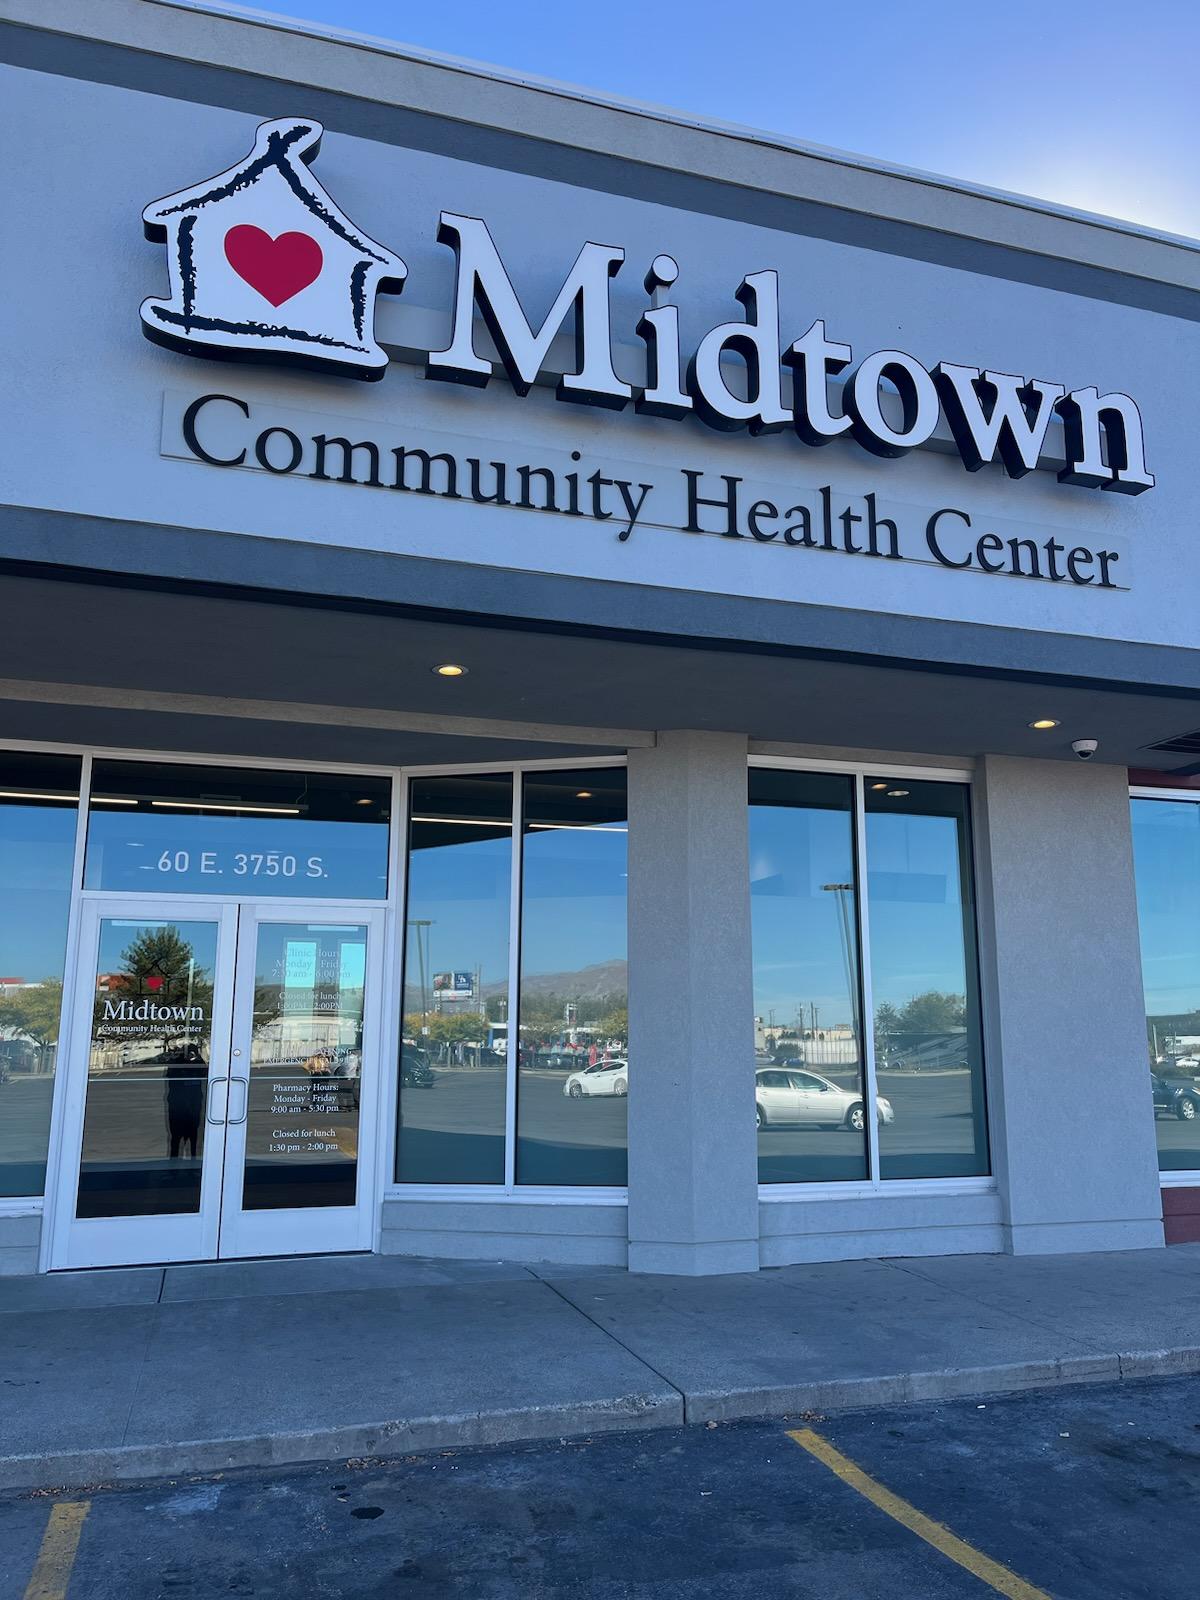 Midtown Community Health Center